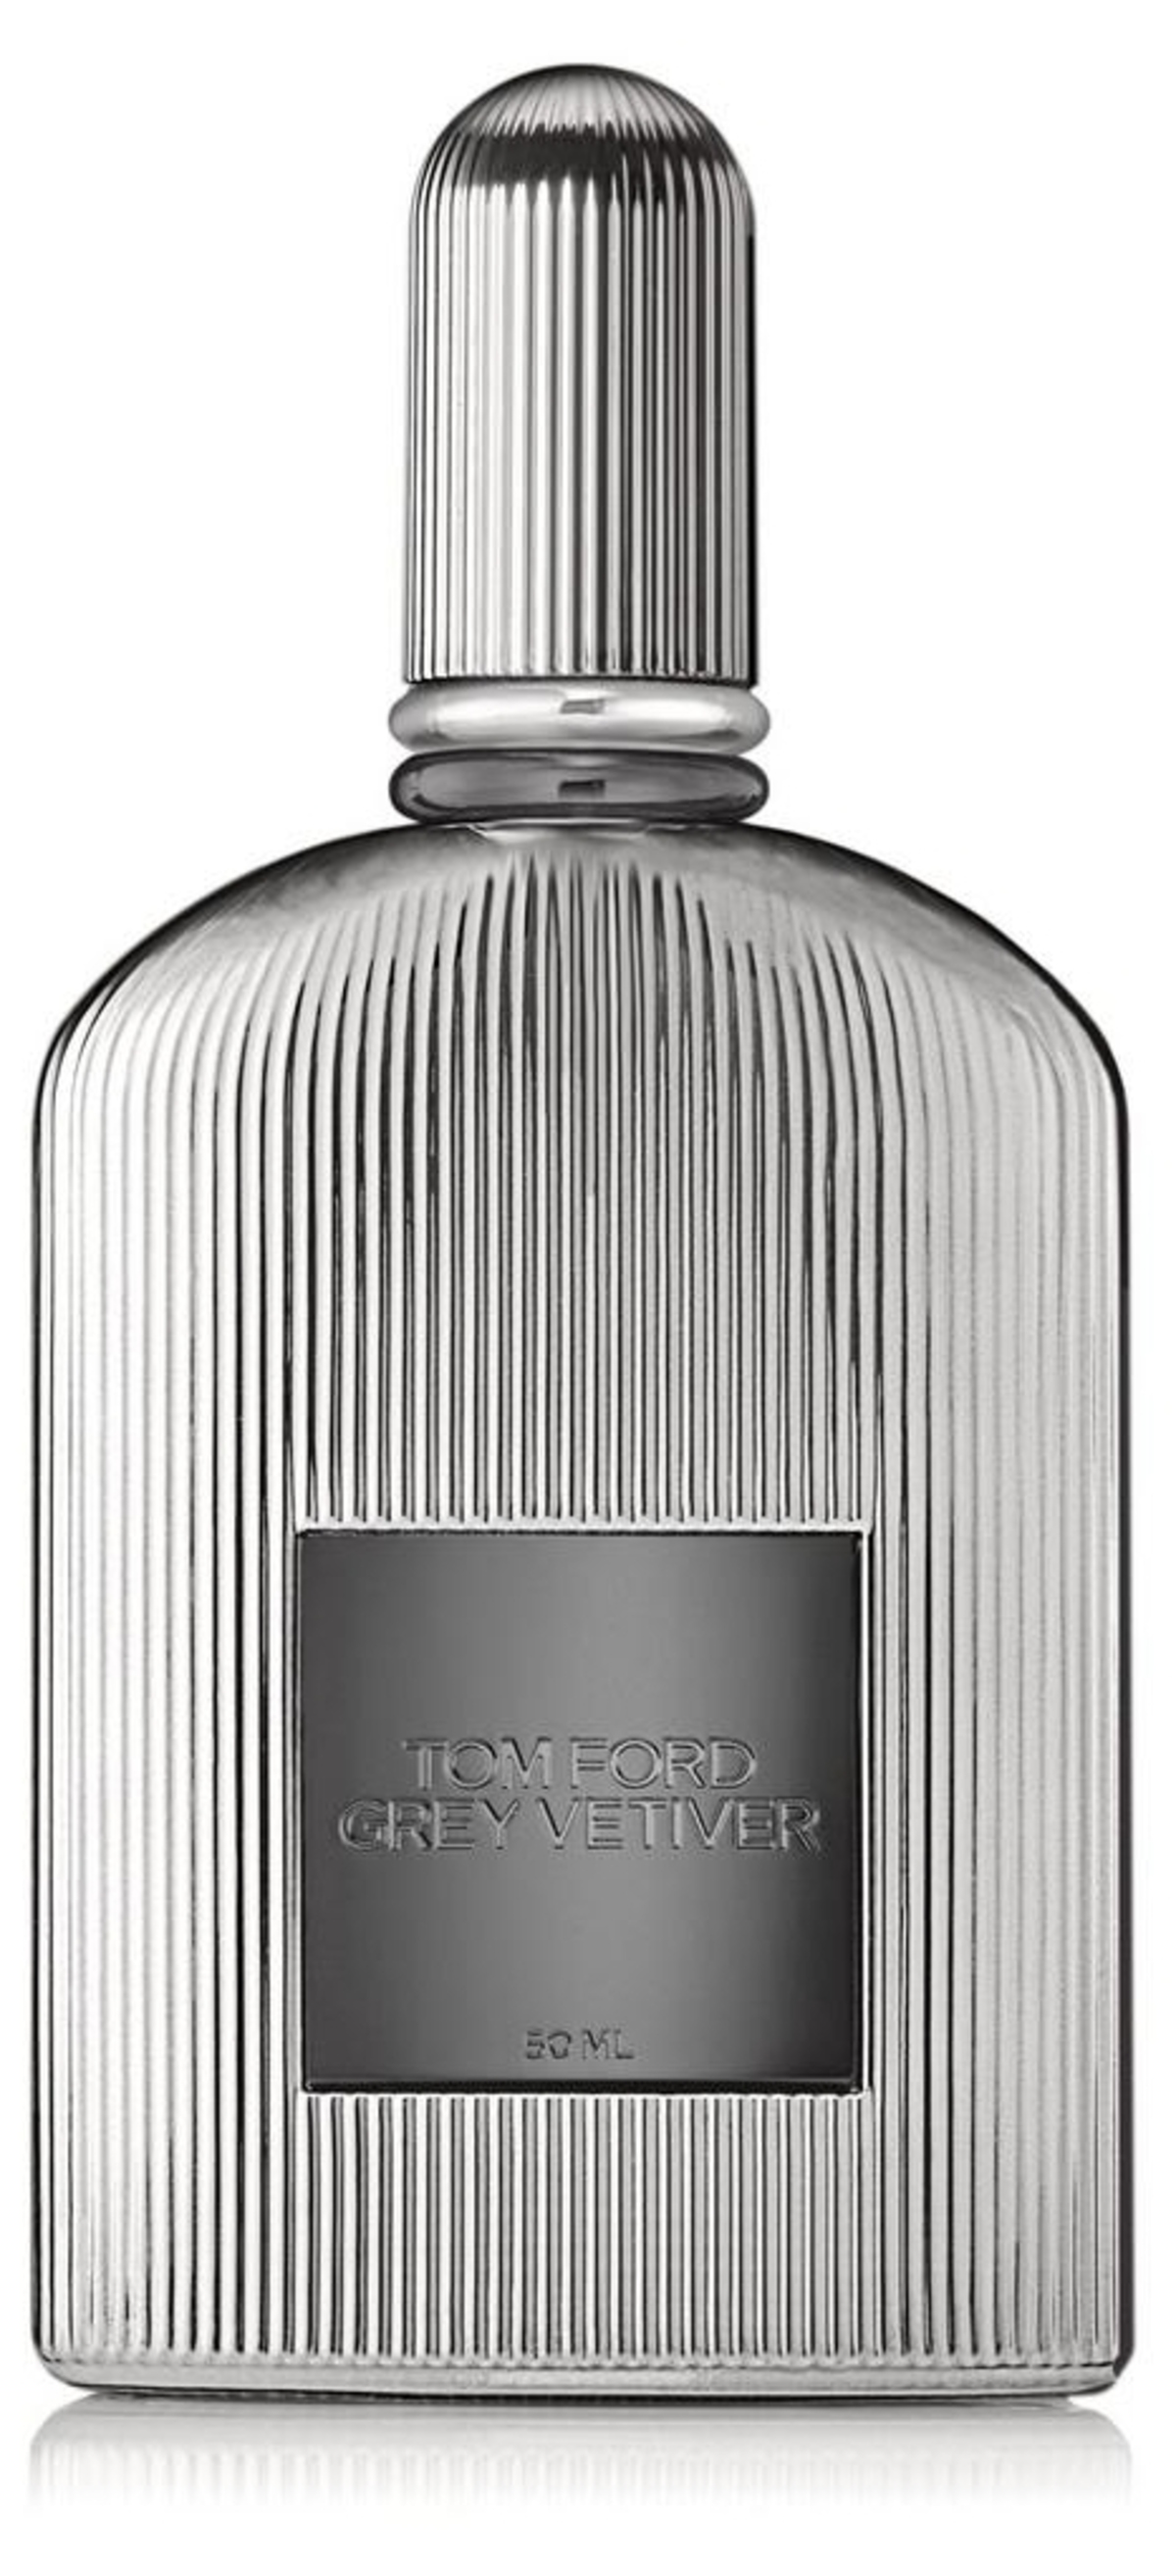 Grey Vetiver Parfum (Tom Ford)